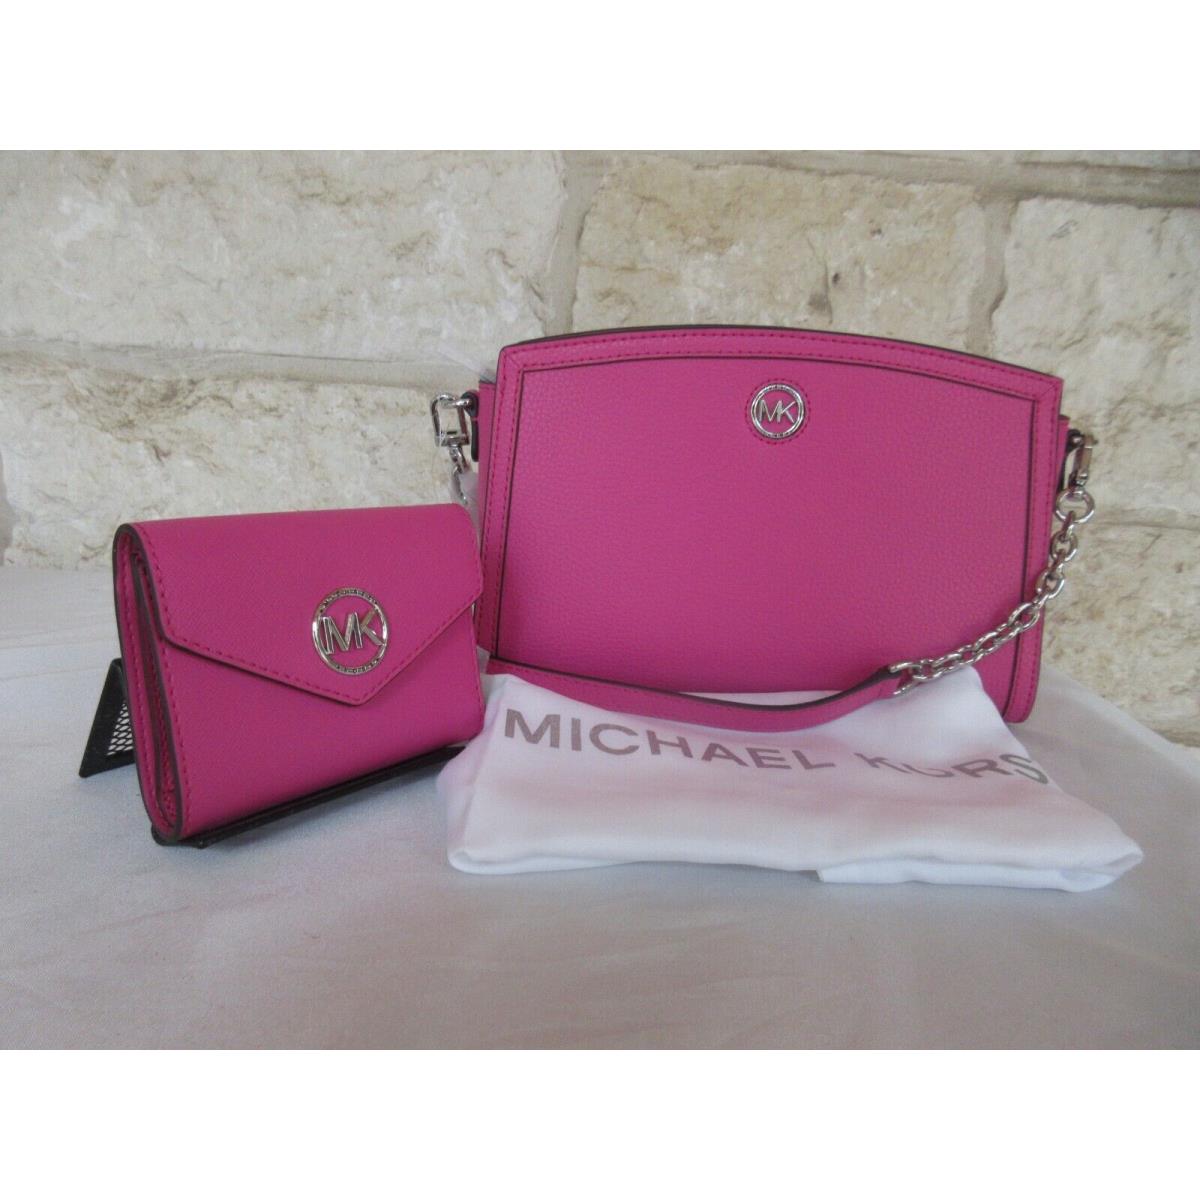 Michael Kors  bag  Chantal - Cerise/Pink Bright Colorful Handle/Strap, Silver Hardware, Cerise (Pink) Silver hardware Exterior 5